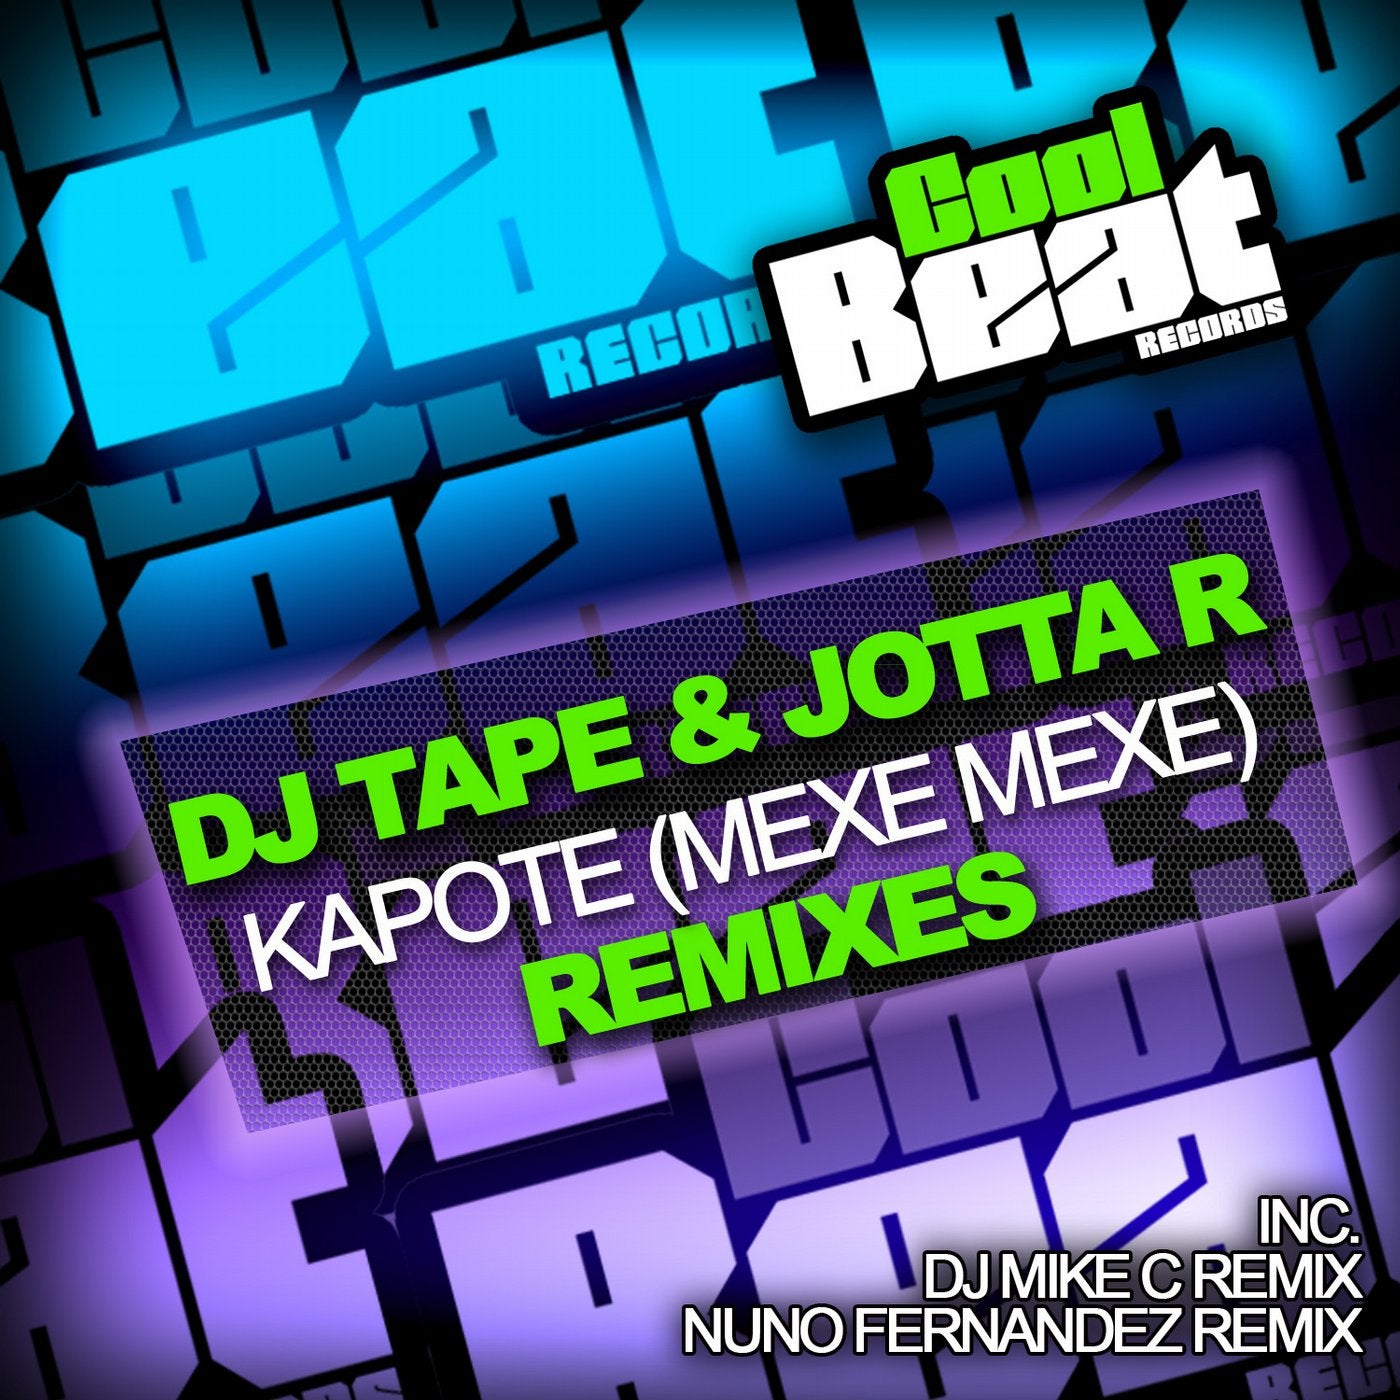 Kapote (Mexe Mexe) Remixes